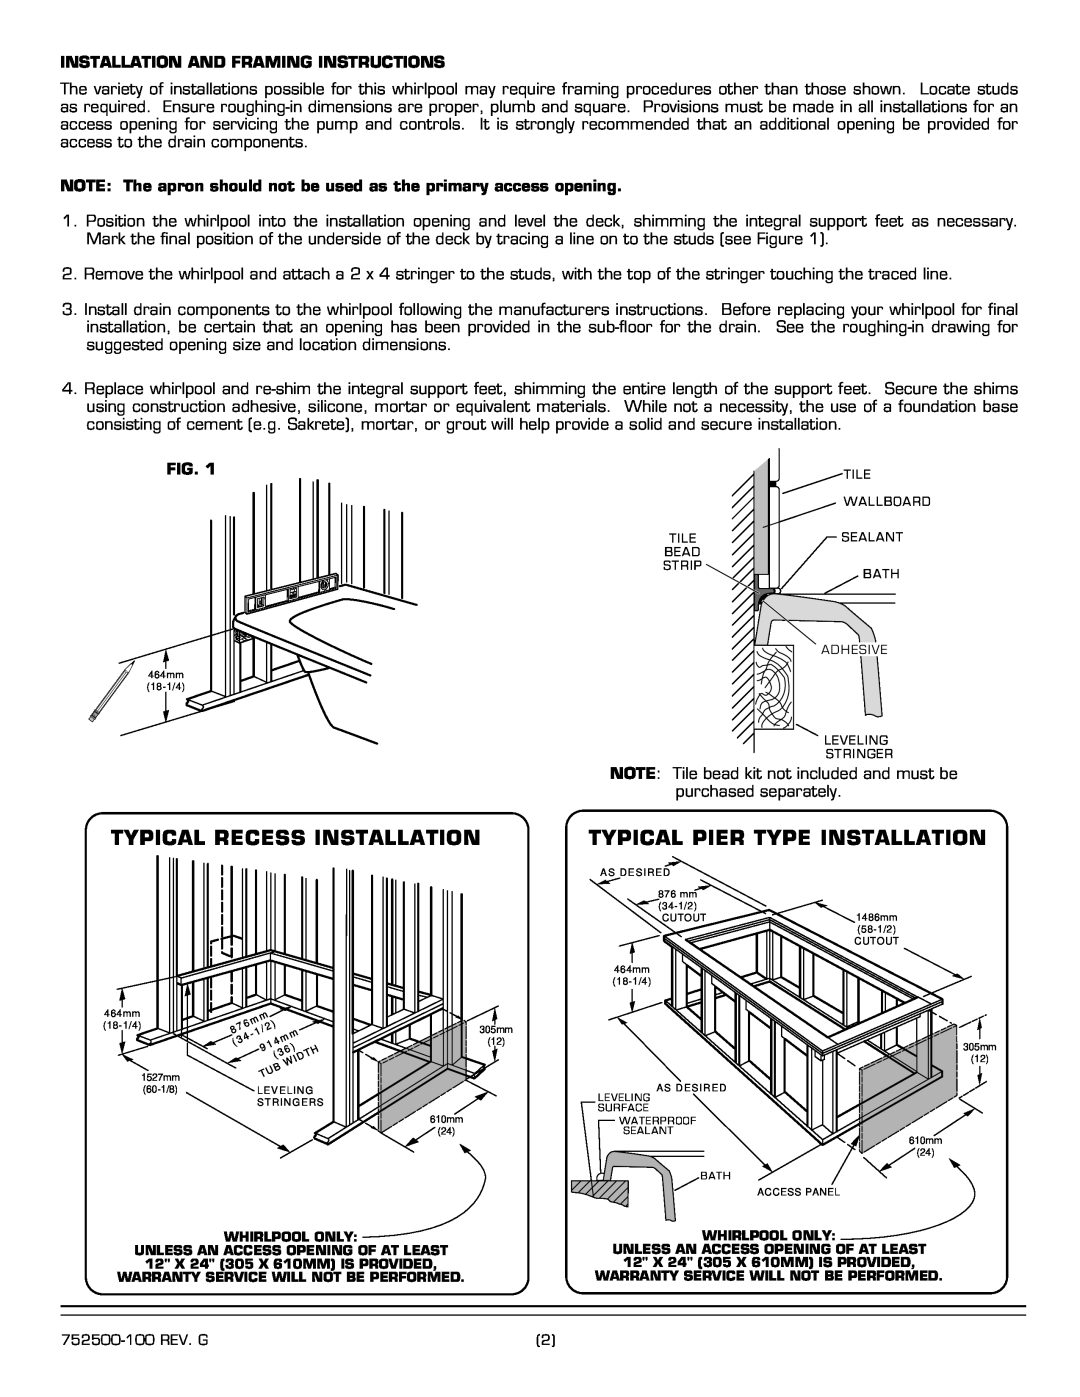 American Standard 2771.XXXW Series installation instructions Typical Recess Installation, Typical Pier Type Installation 